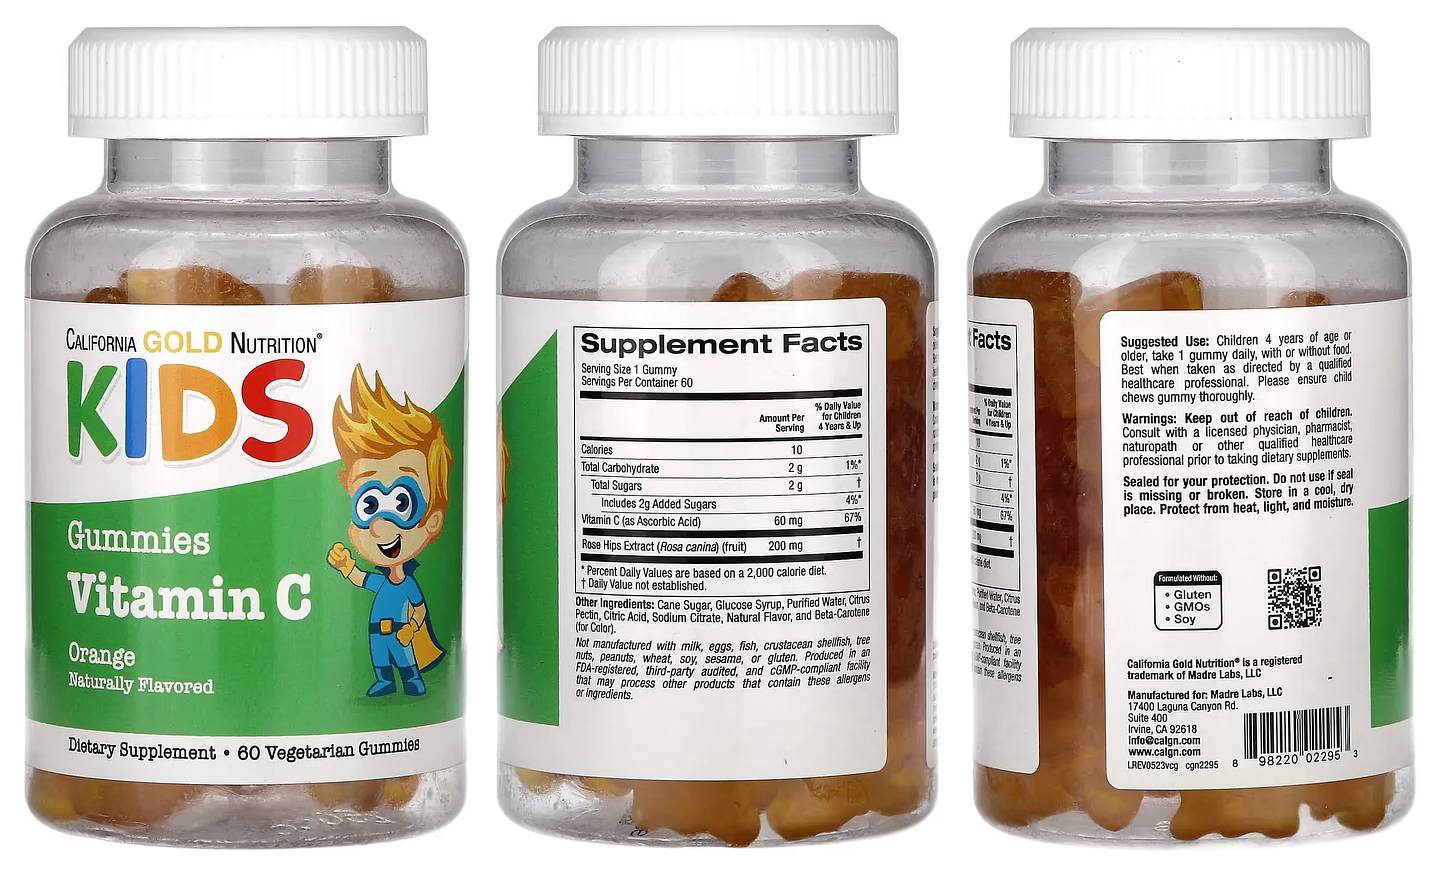 California Gold Nutrition, Vitamin C For Children packaging